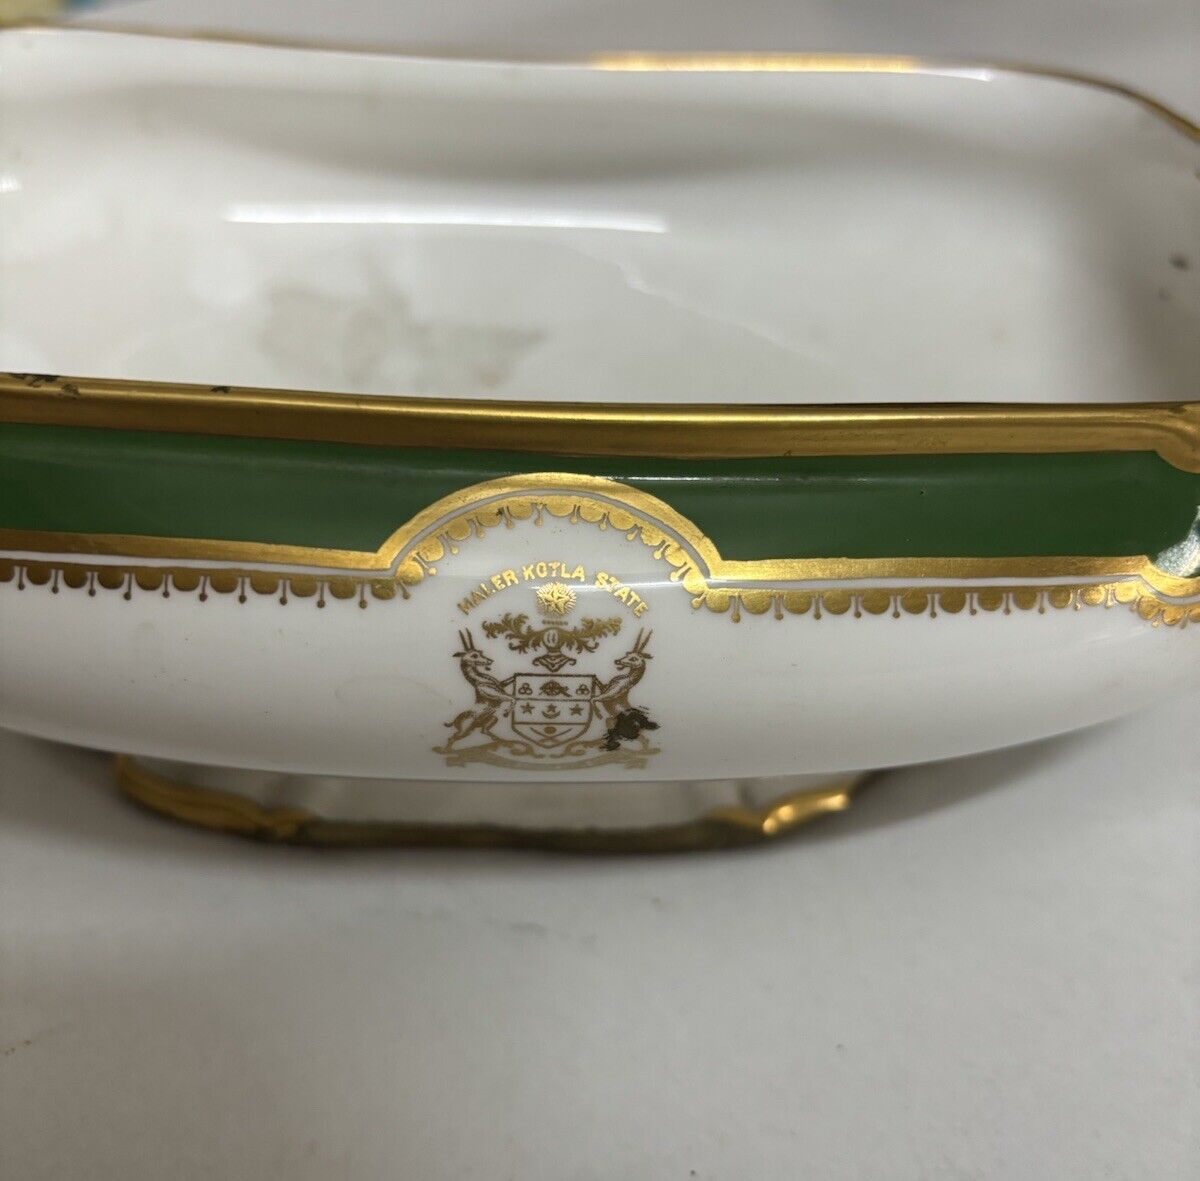 Vintage MalerKotla Porcelain Bowl Antique Gold Osler India Rare Collectible